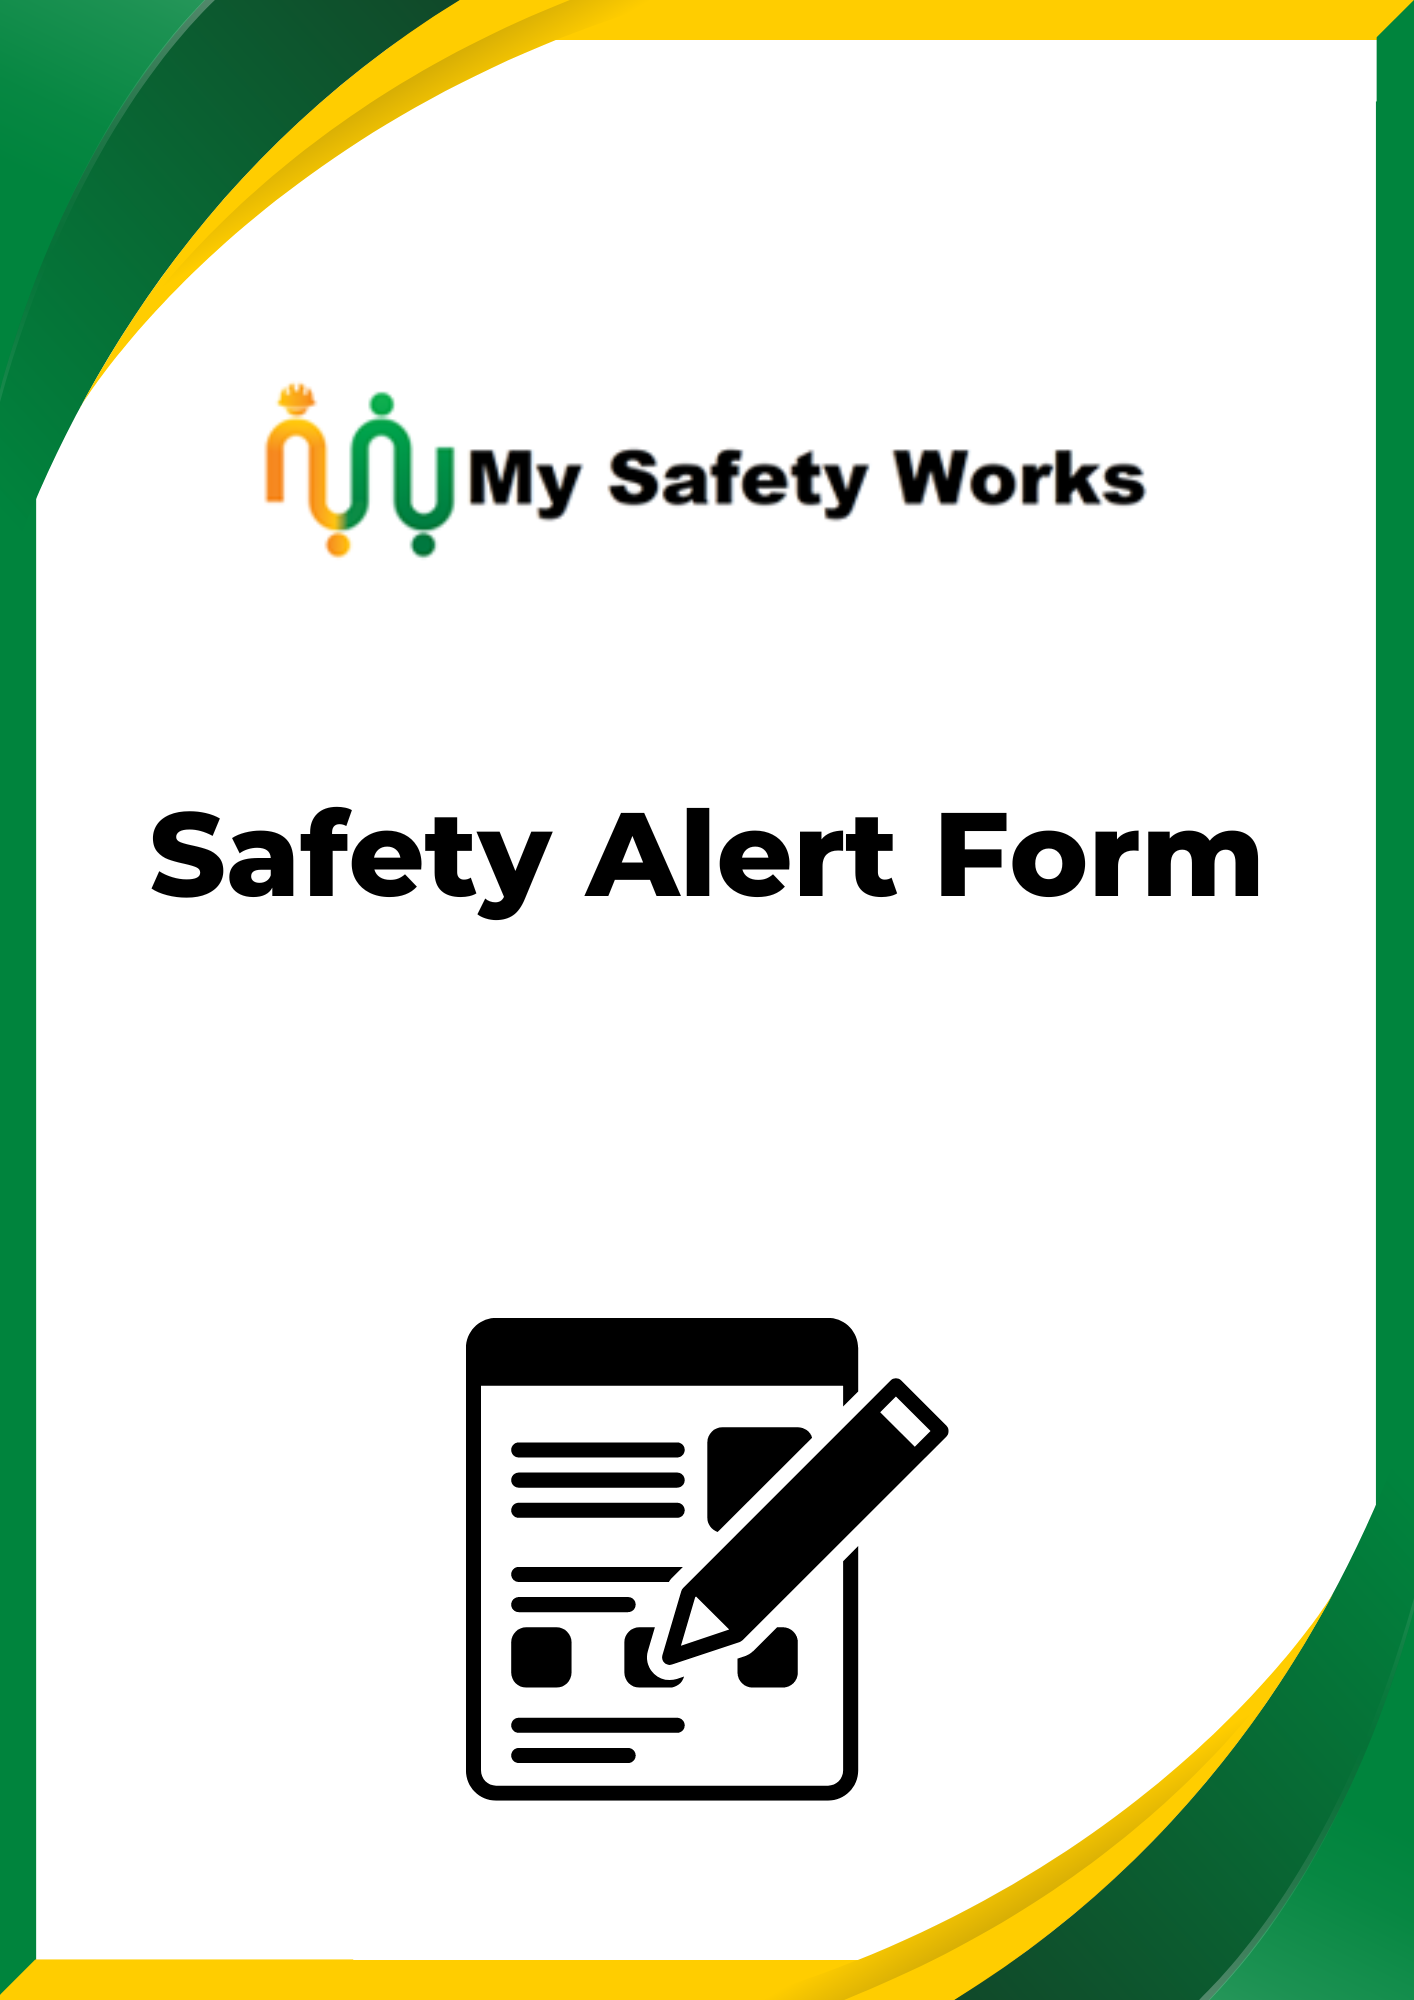 safety-alert-form-my-safety-works